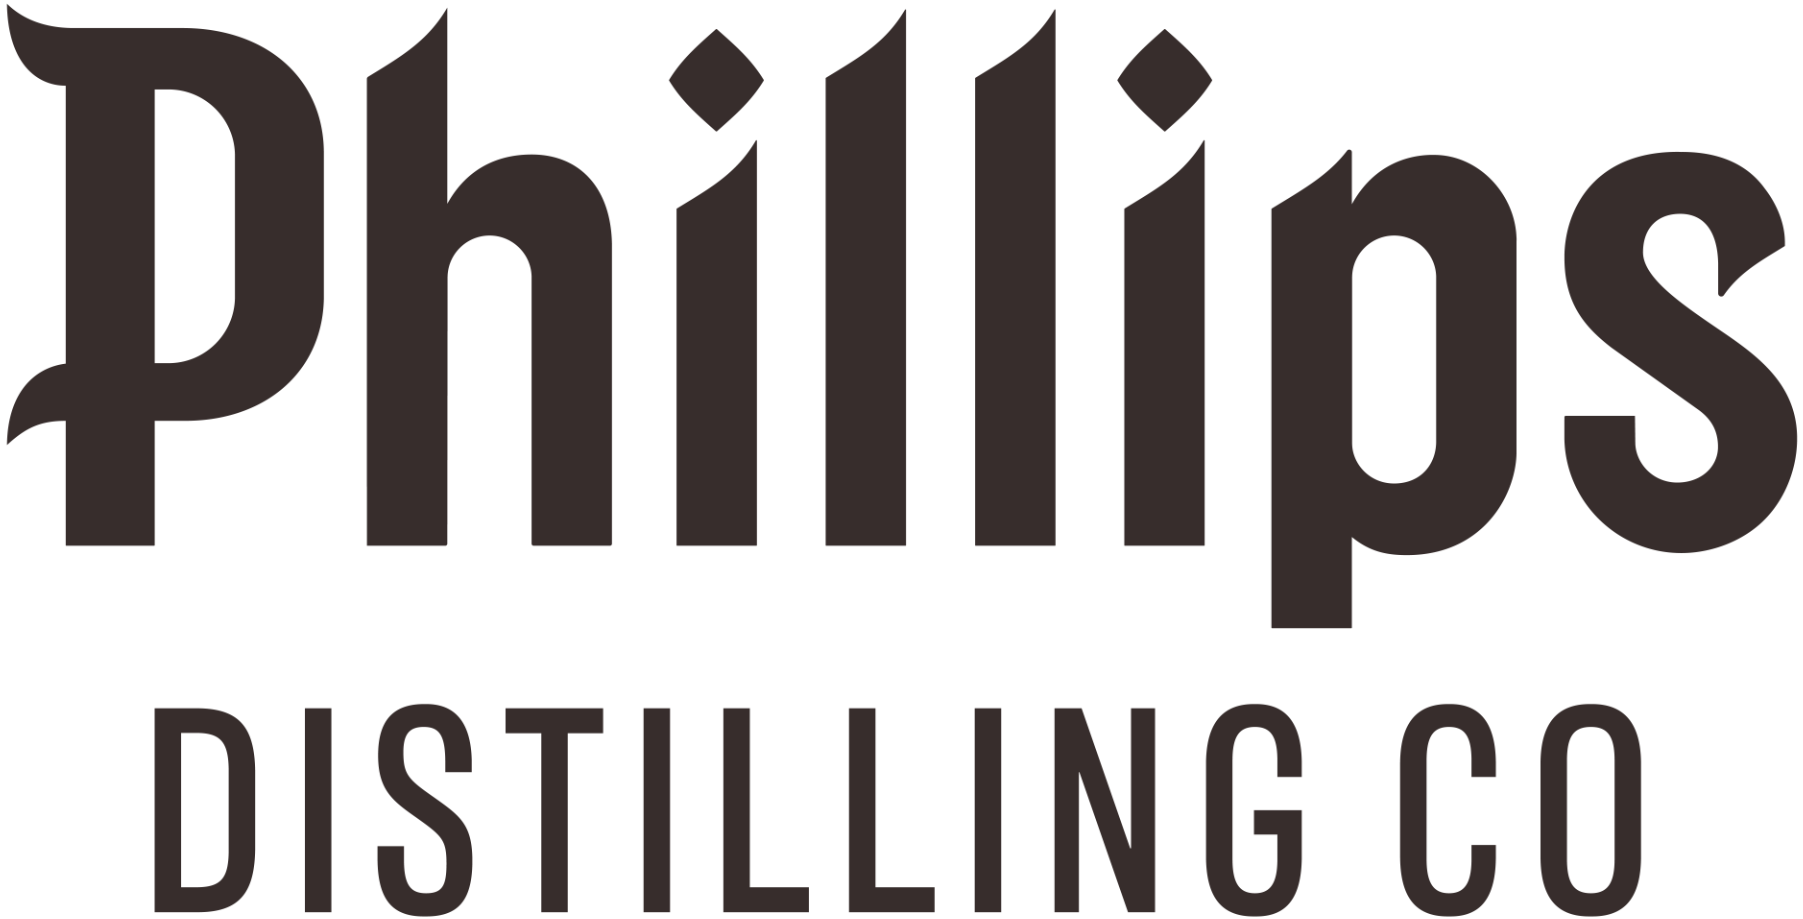 Phillips Distilling Co.